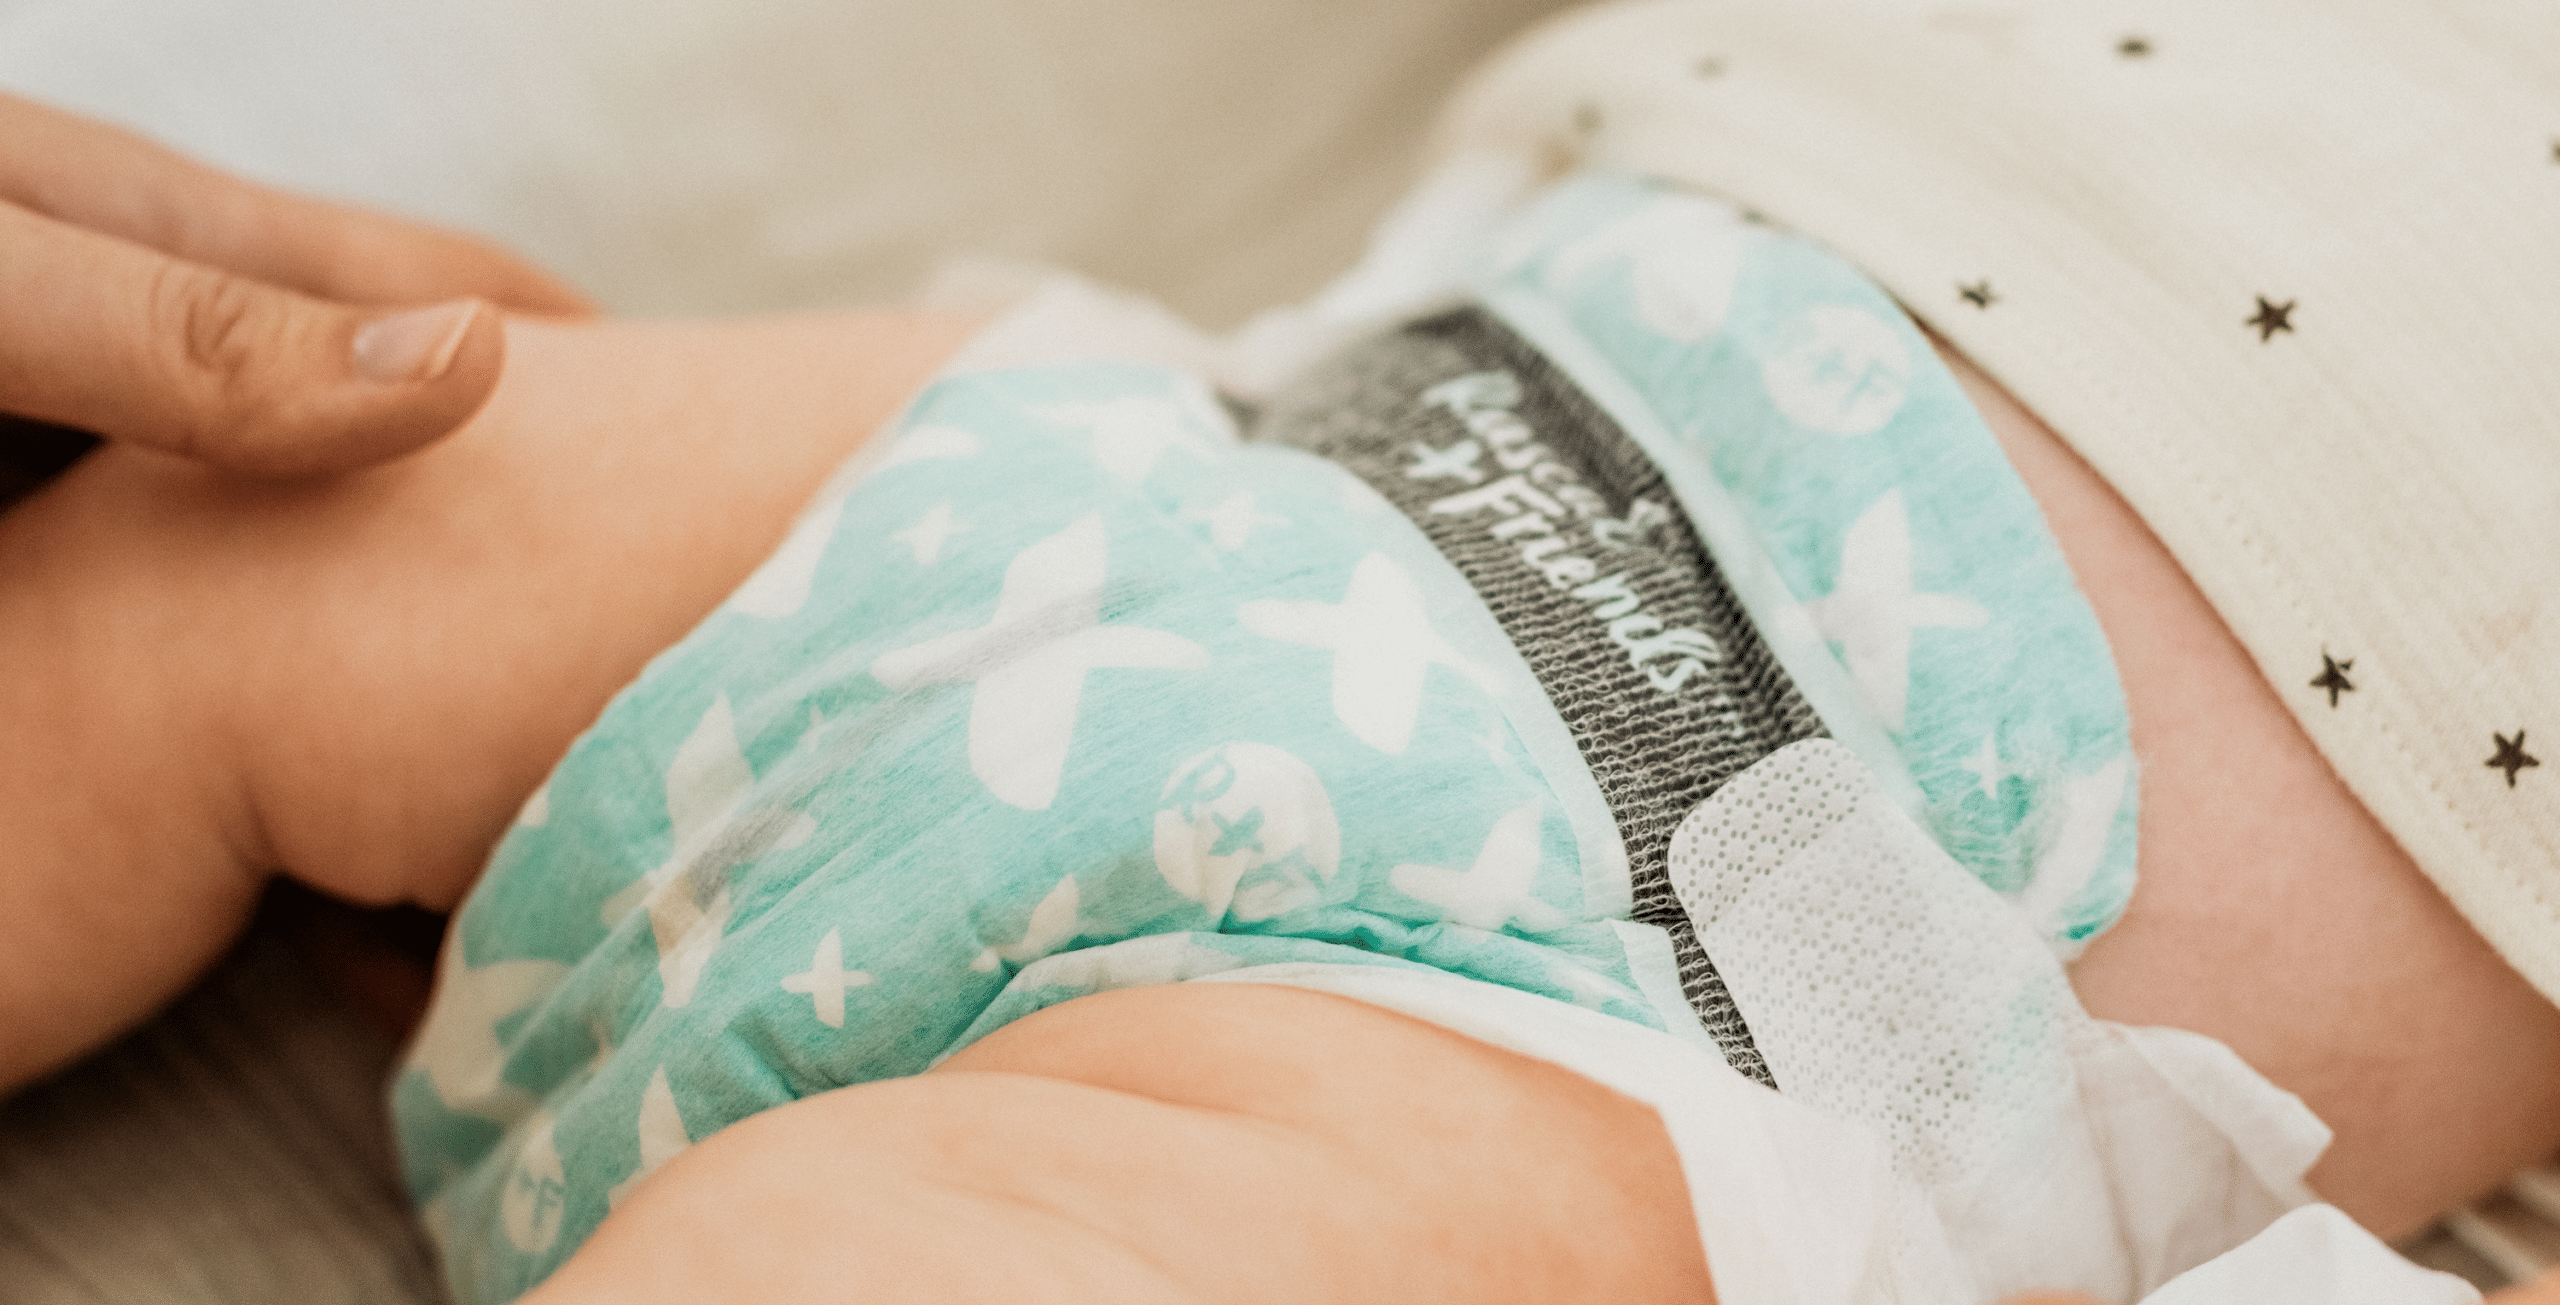 How to treat baby diaper rash